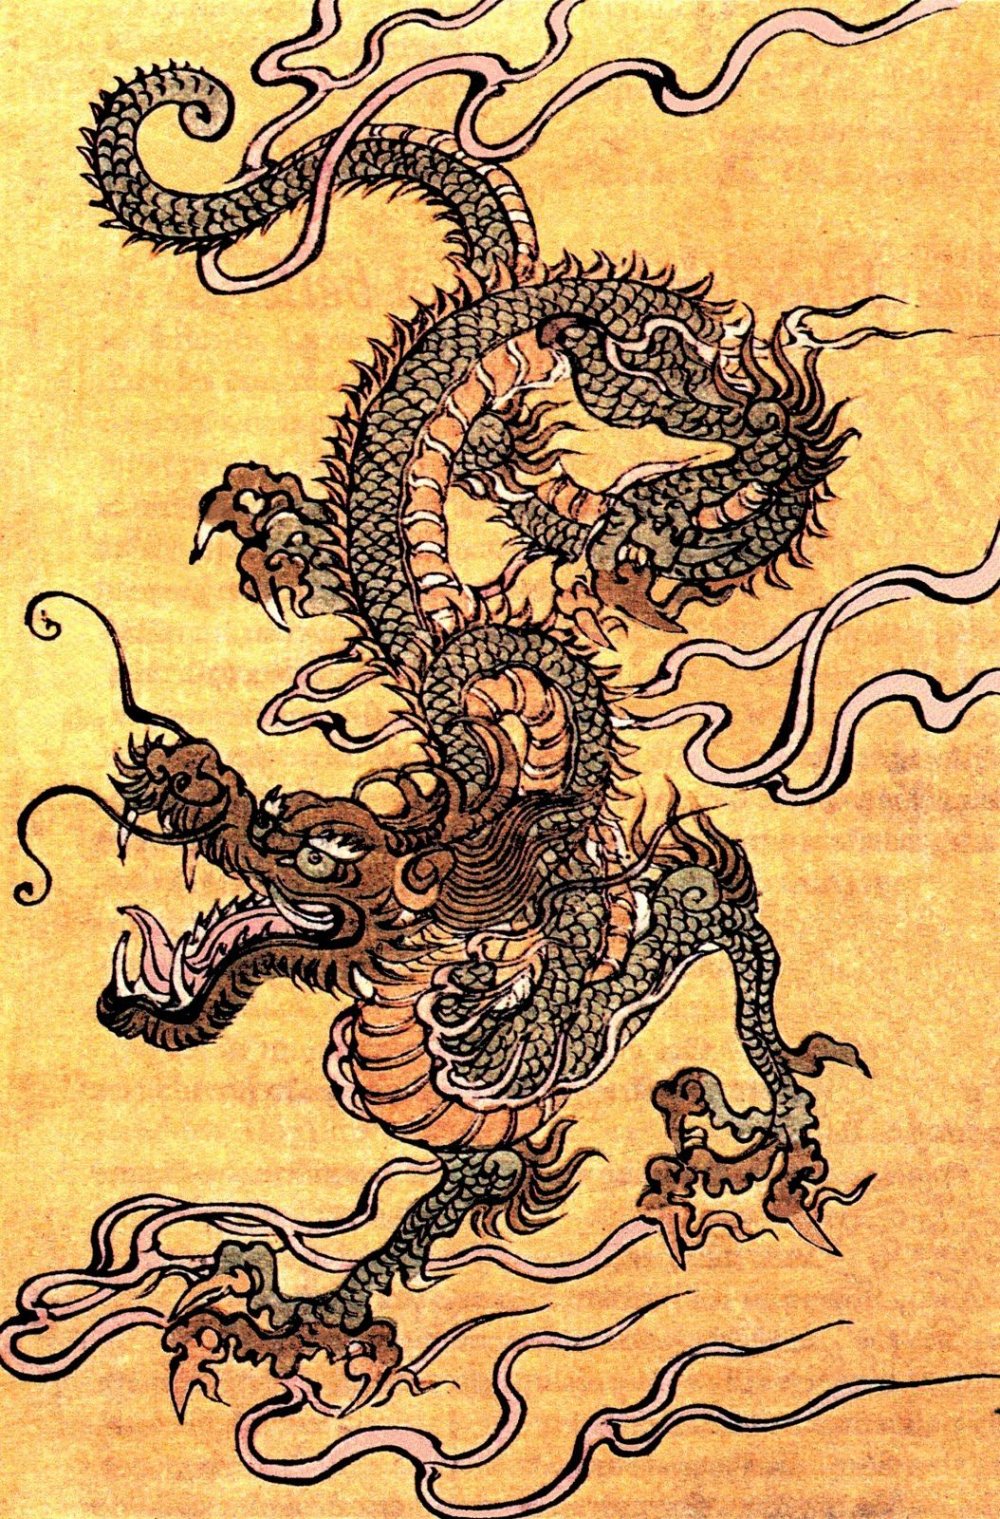 Японский дракон. Японская мифология